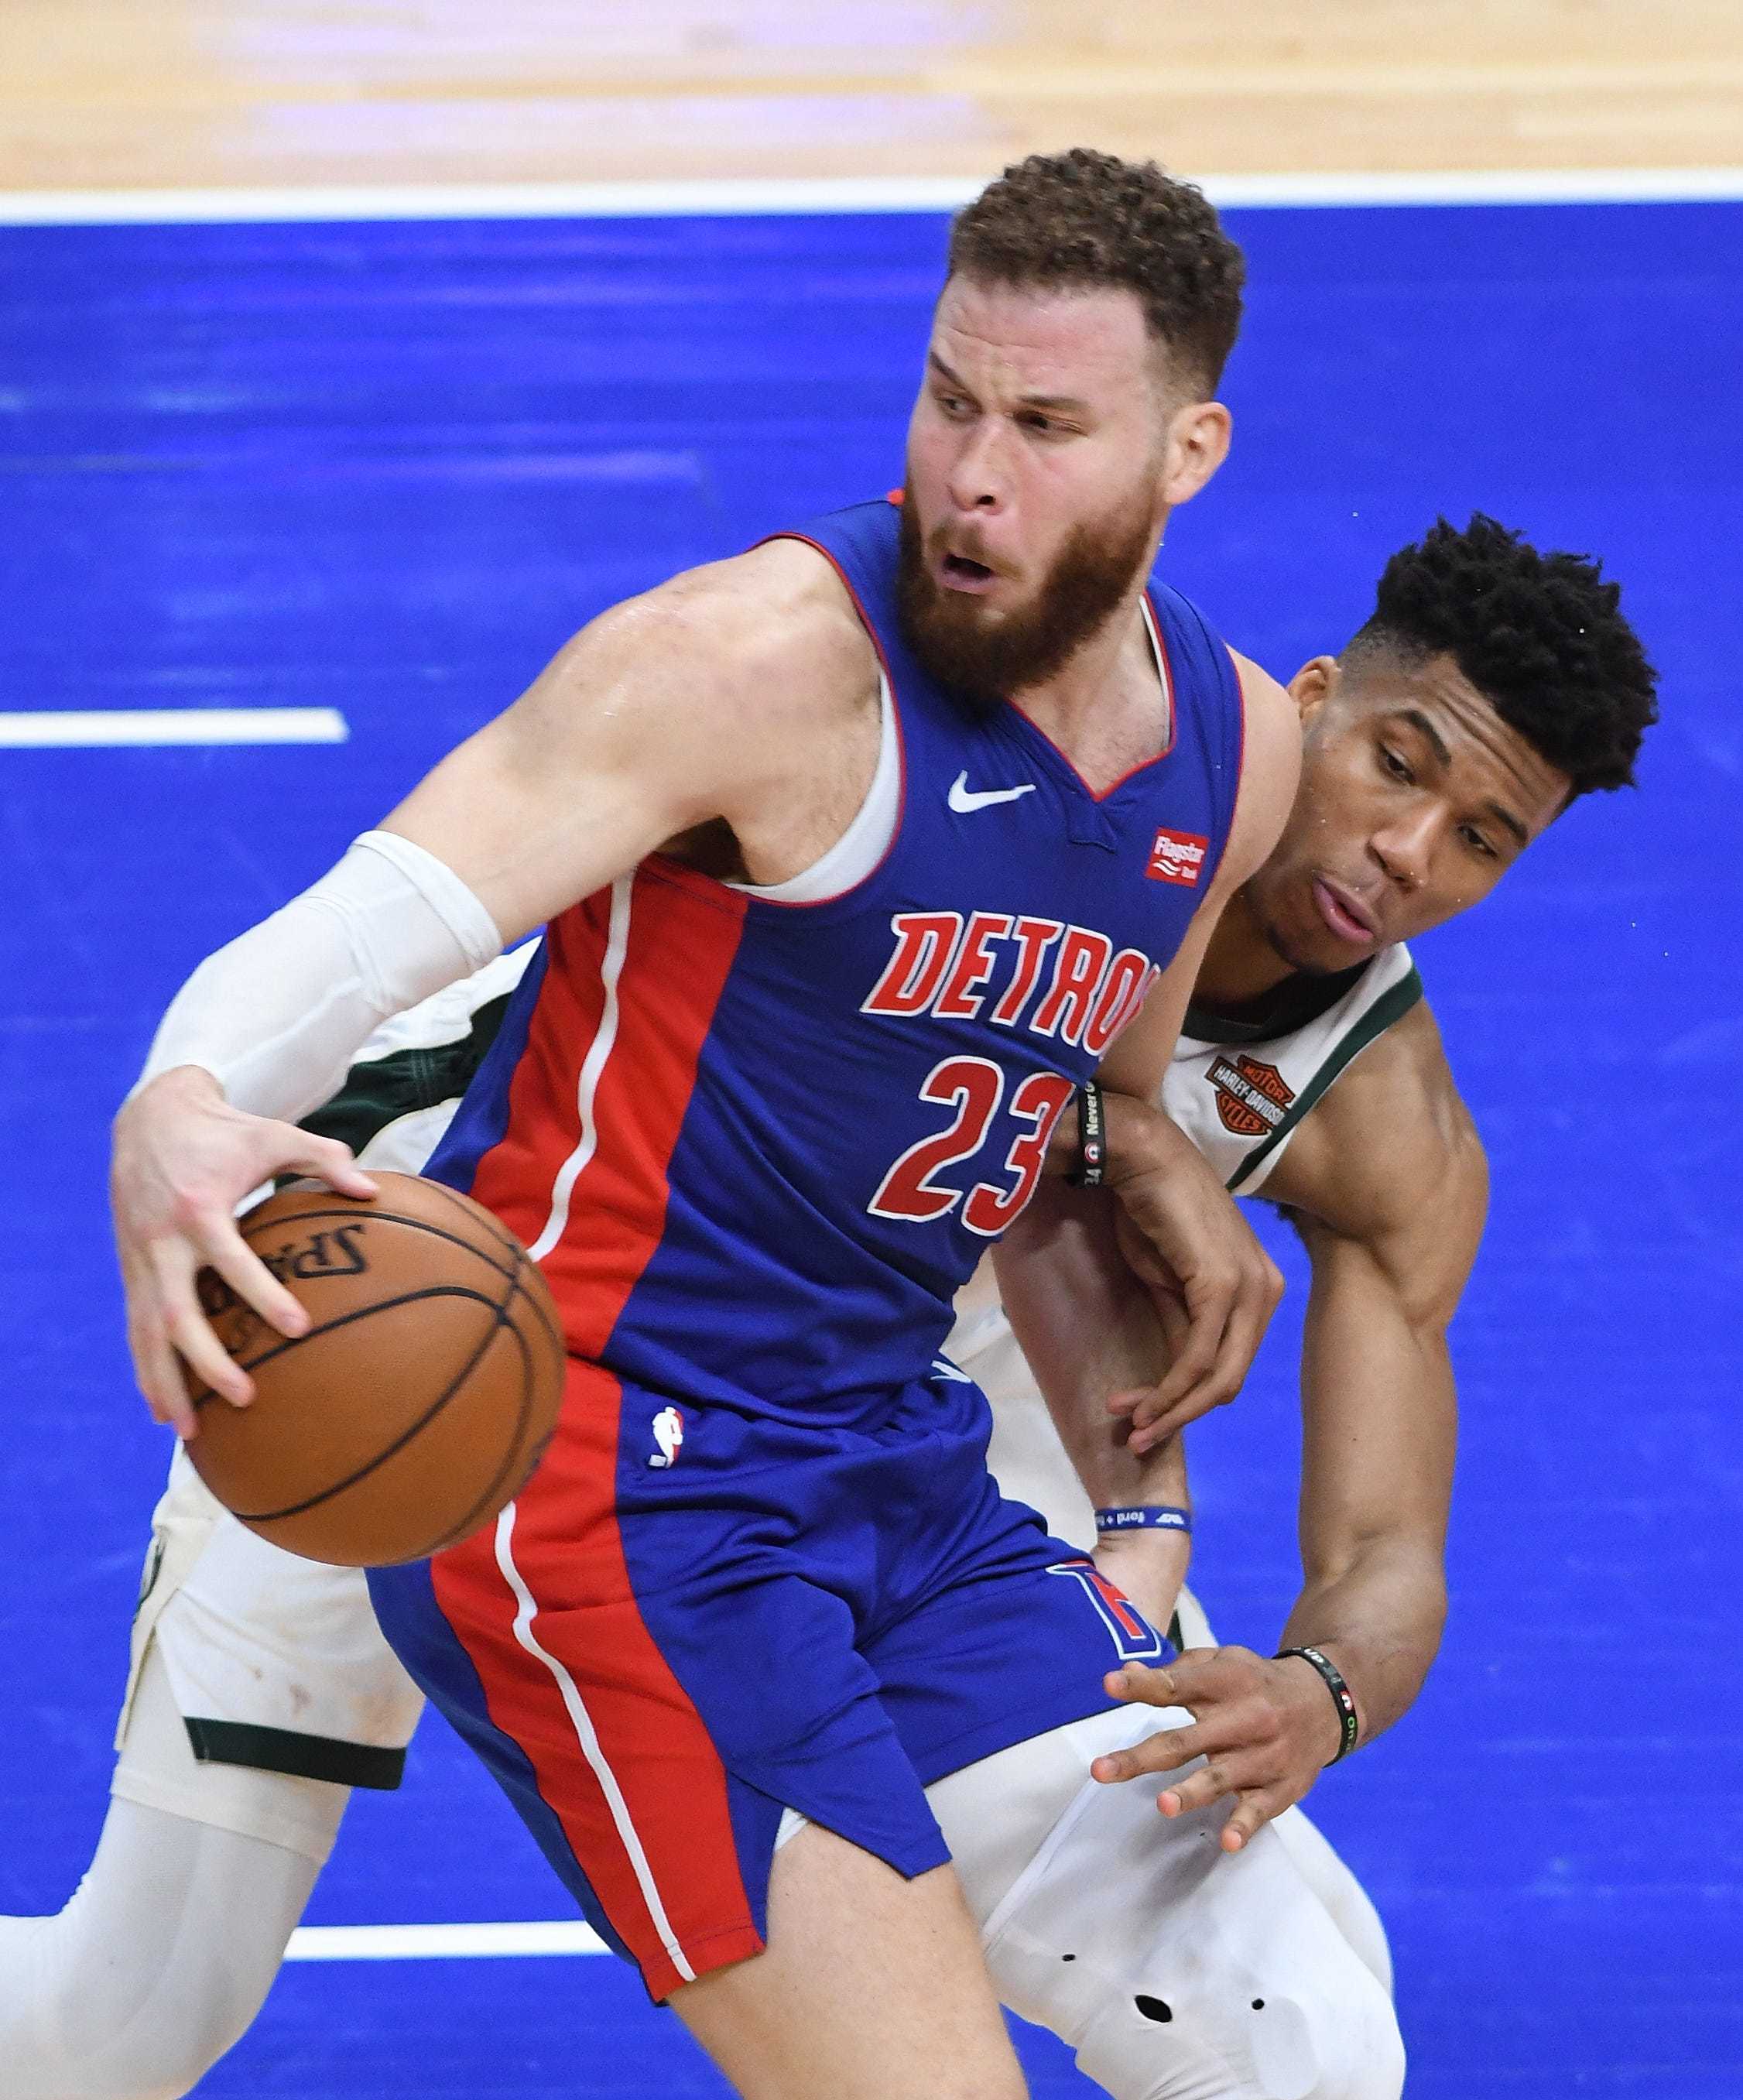 Pistons forward Blake Griffin says he'll make his regular-season debut Monday against the Timberwolves.